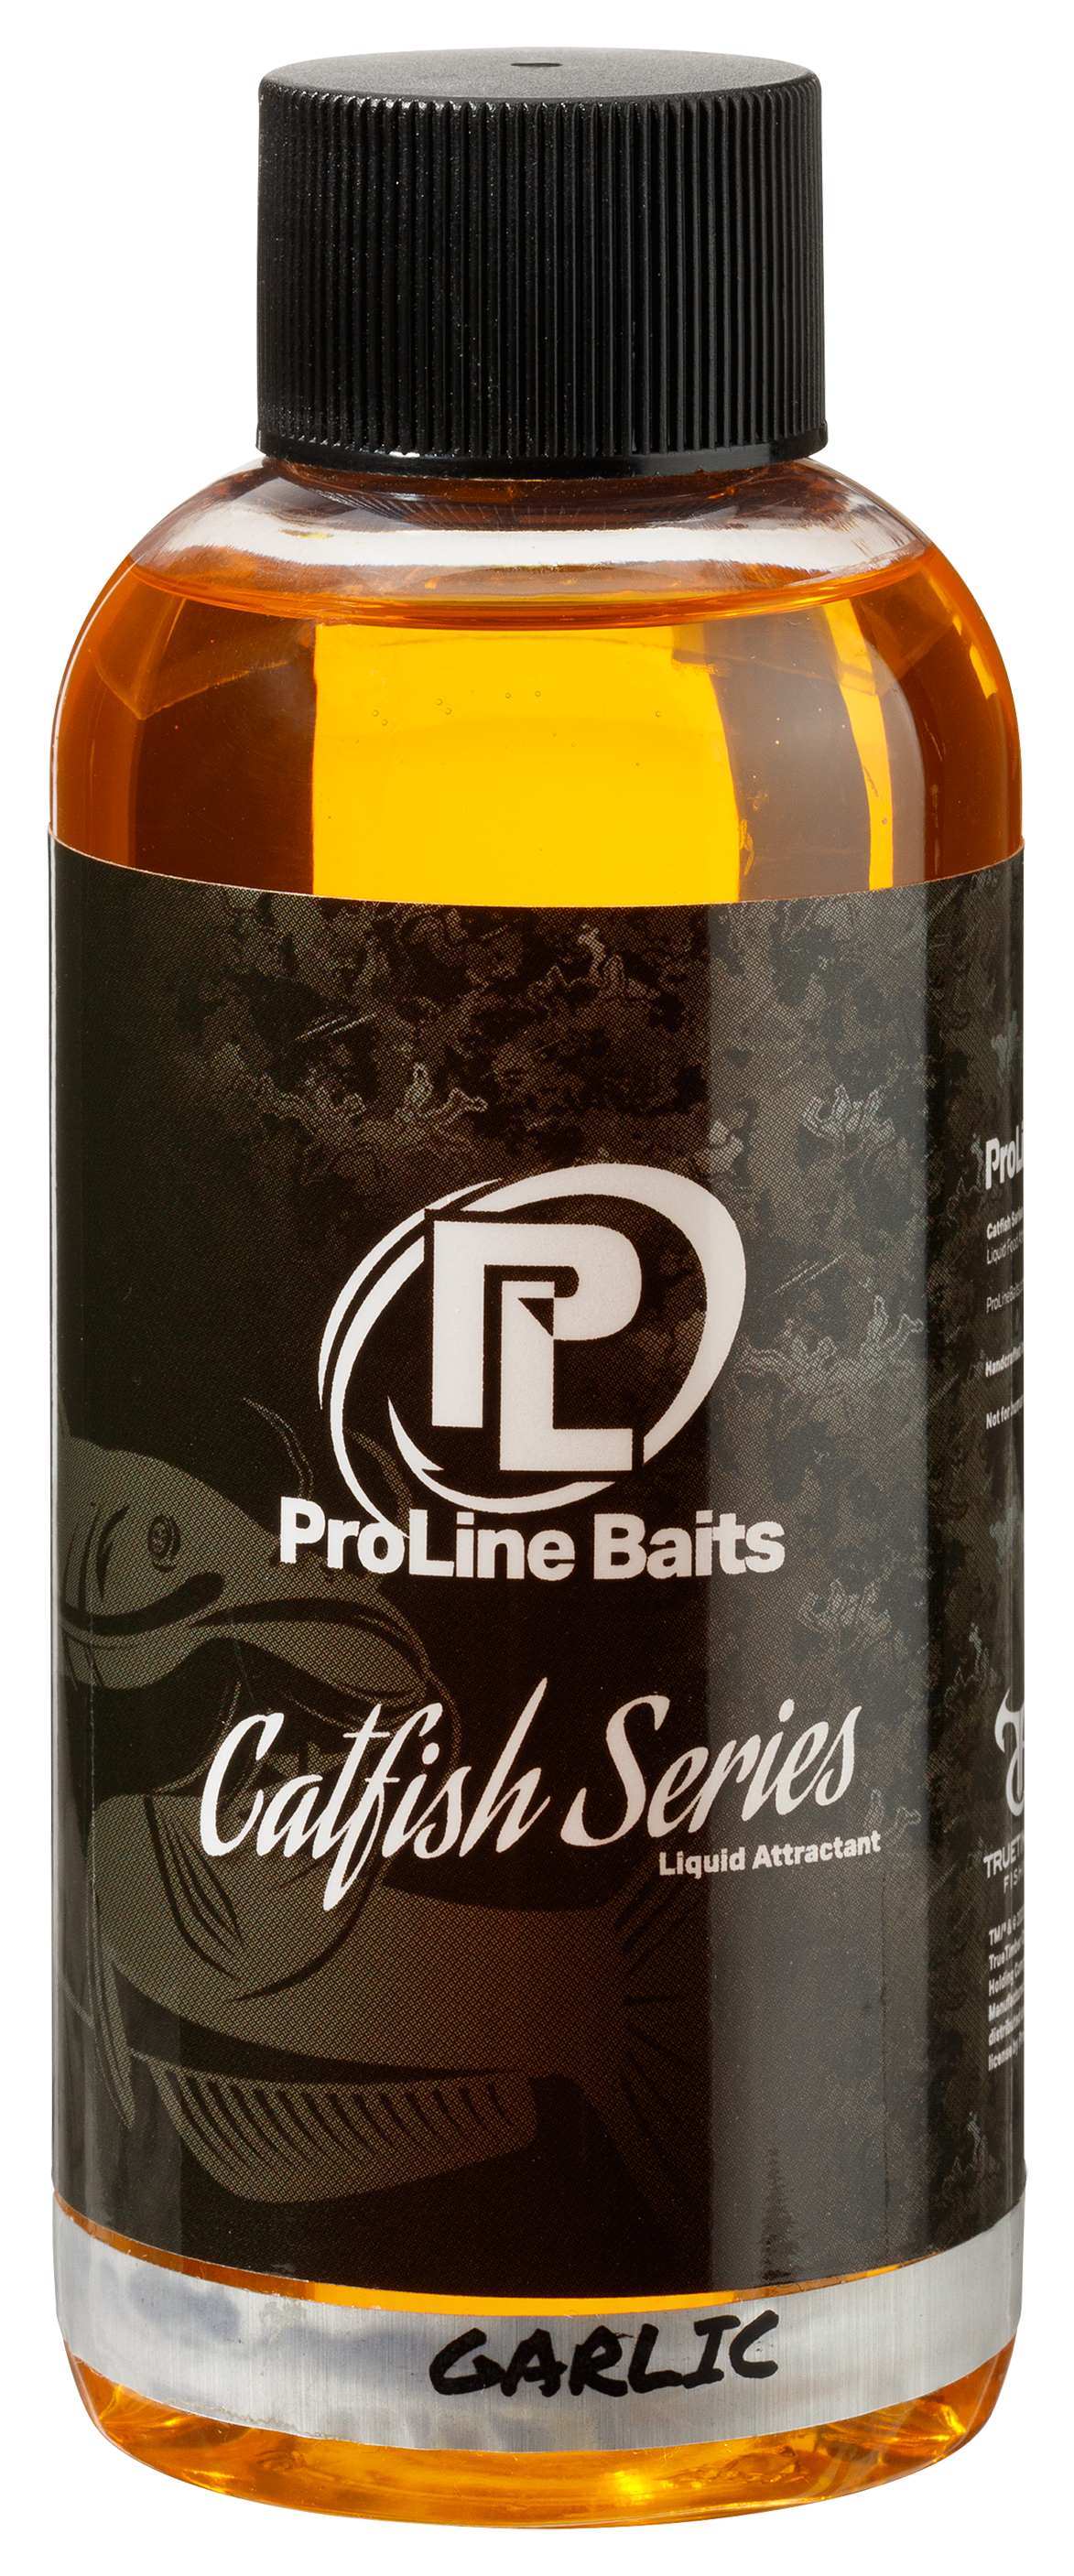 Proline Baits Catfish Series Fish Attractant - Garlic